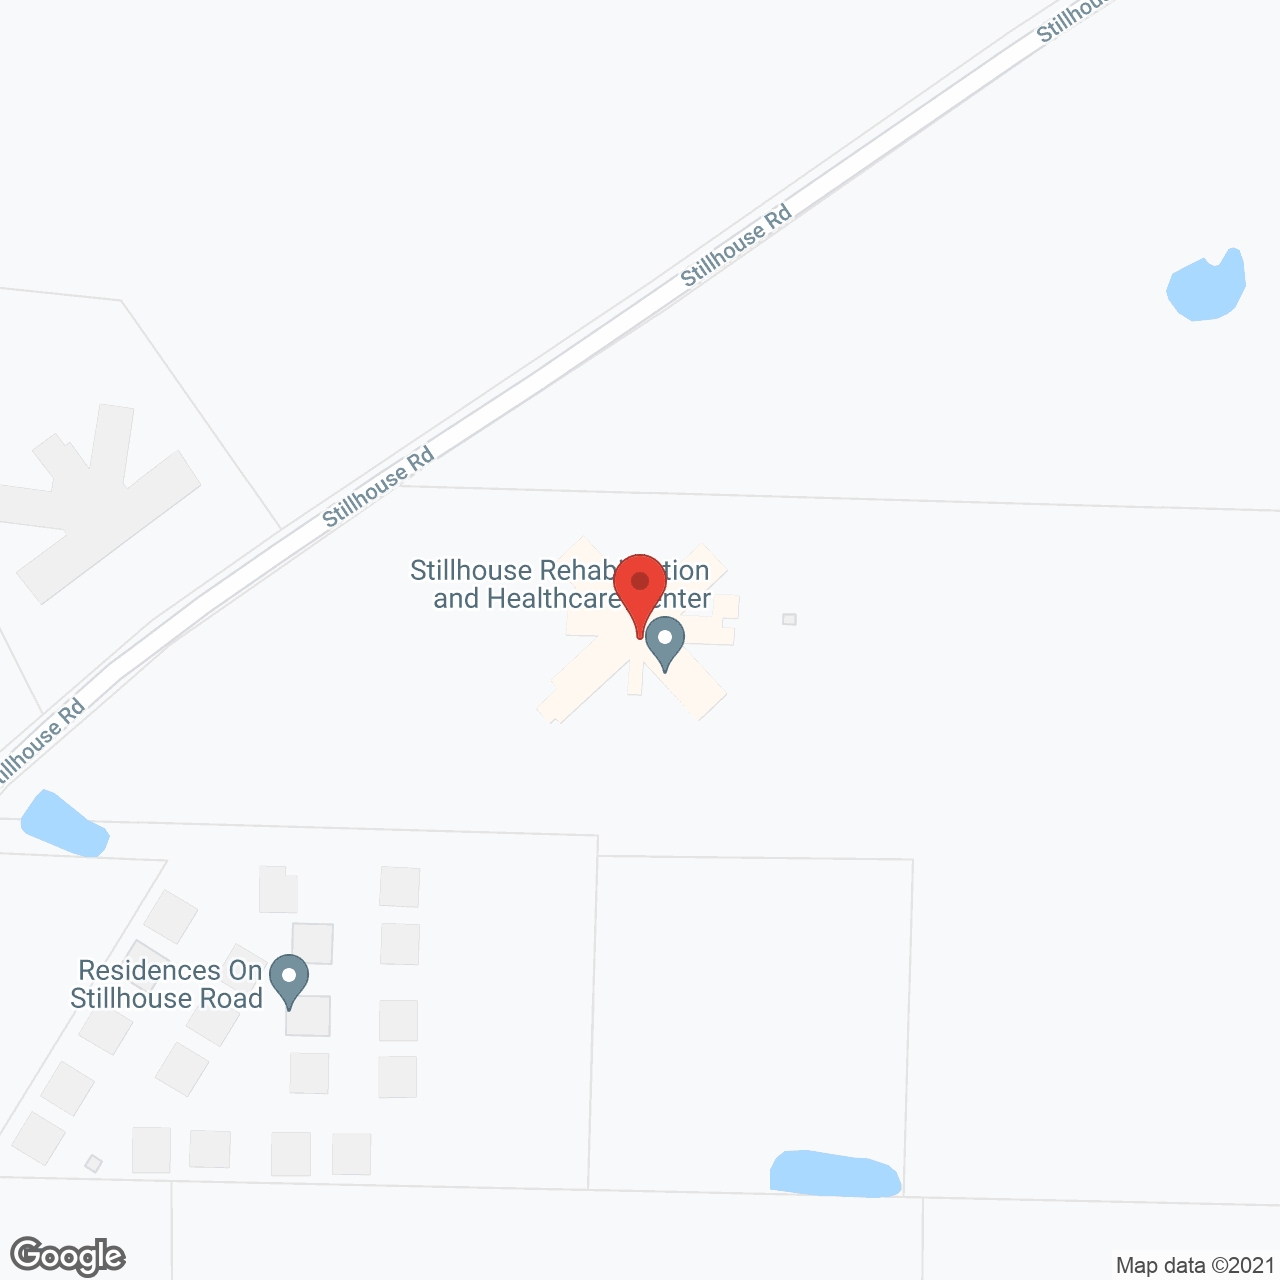 Stillhouse Rehabilitation And Healthcare Center in google map